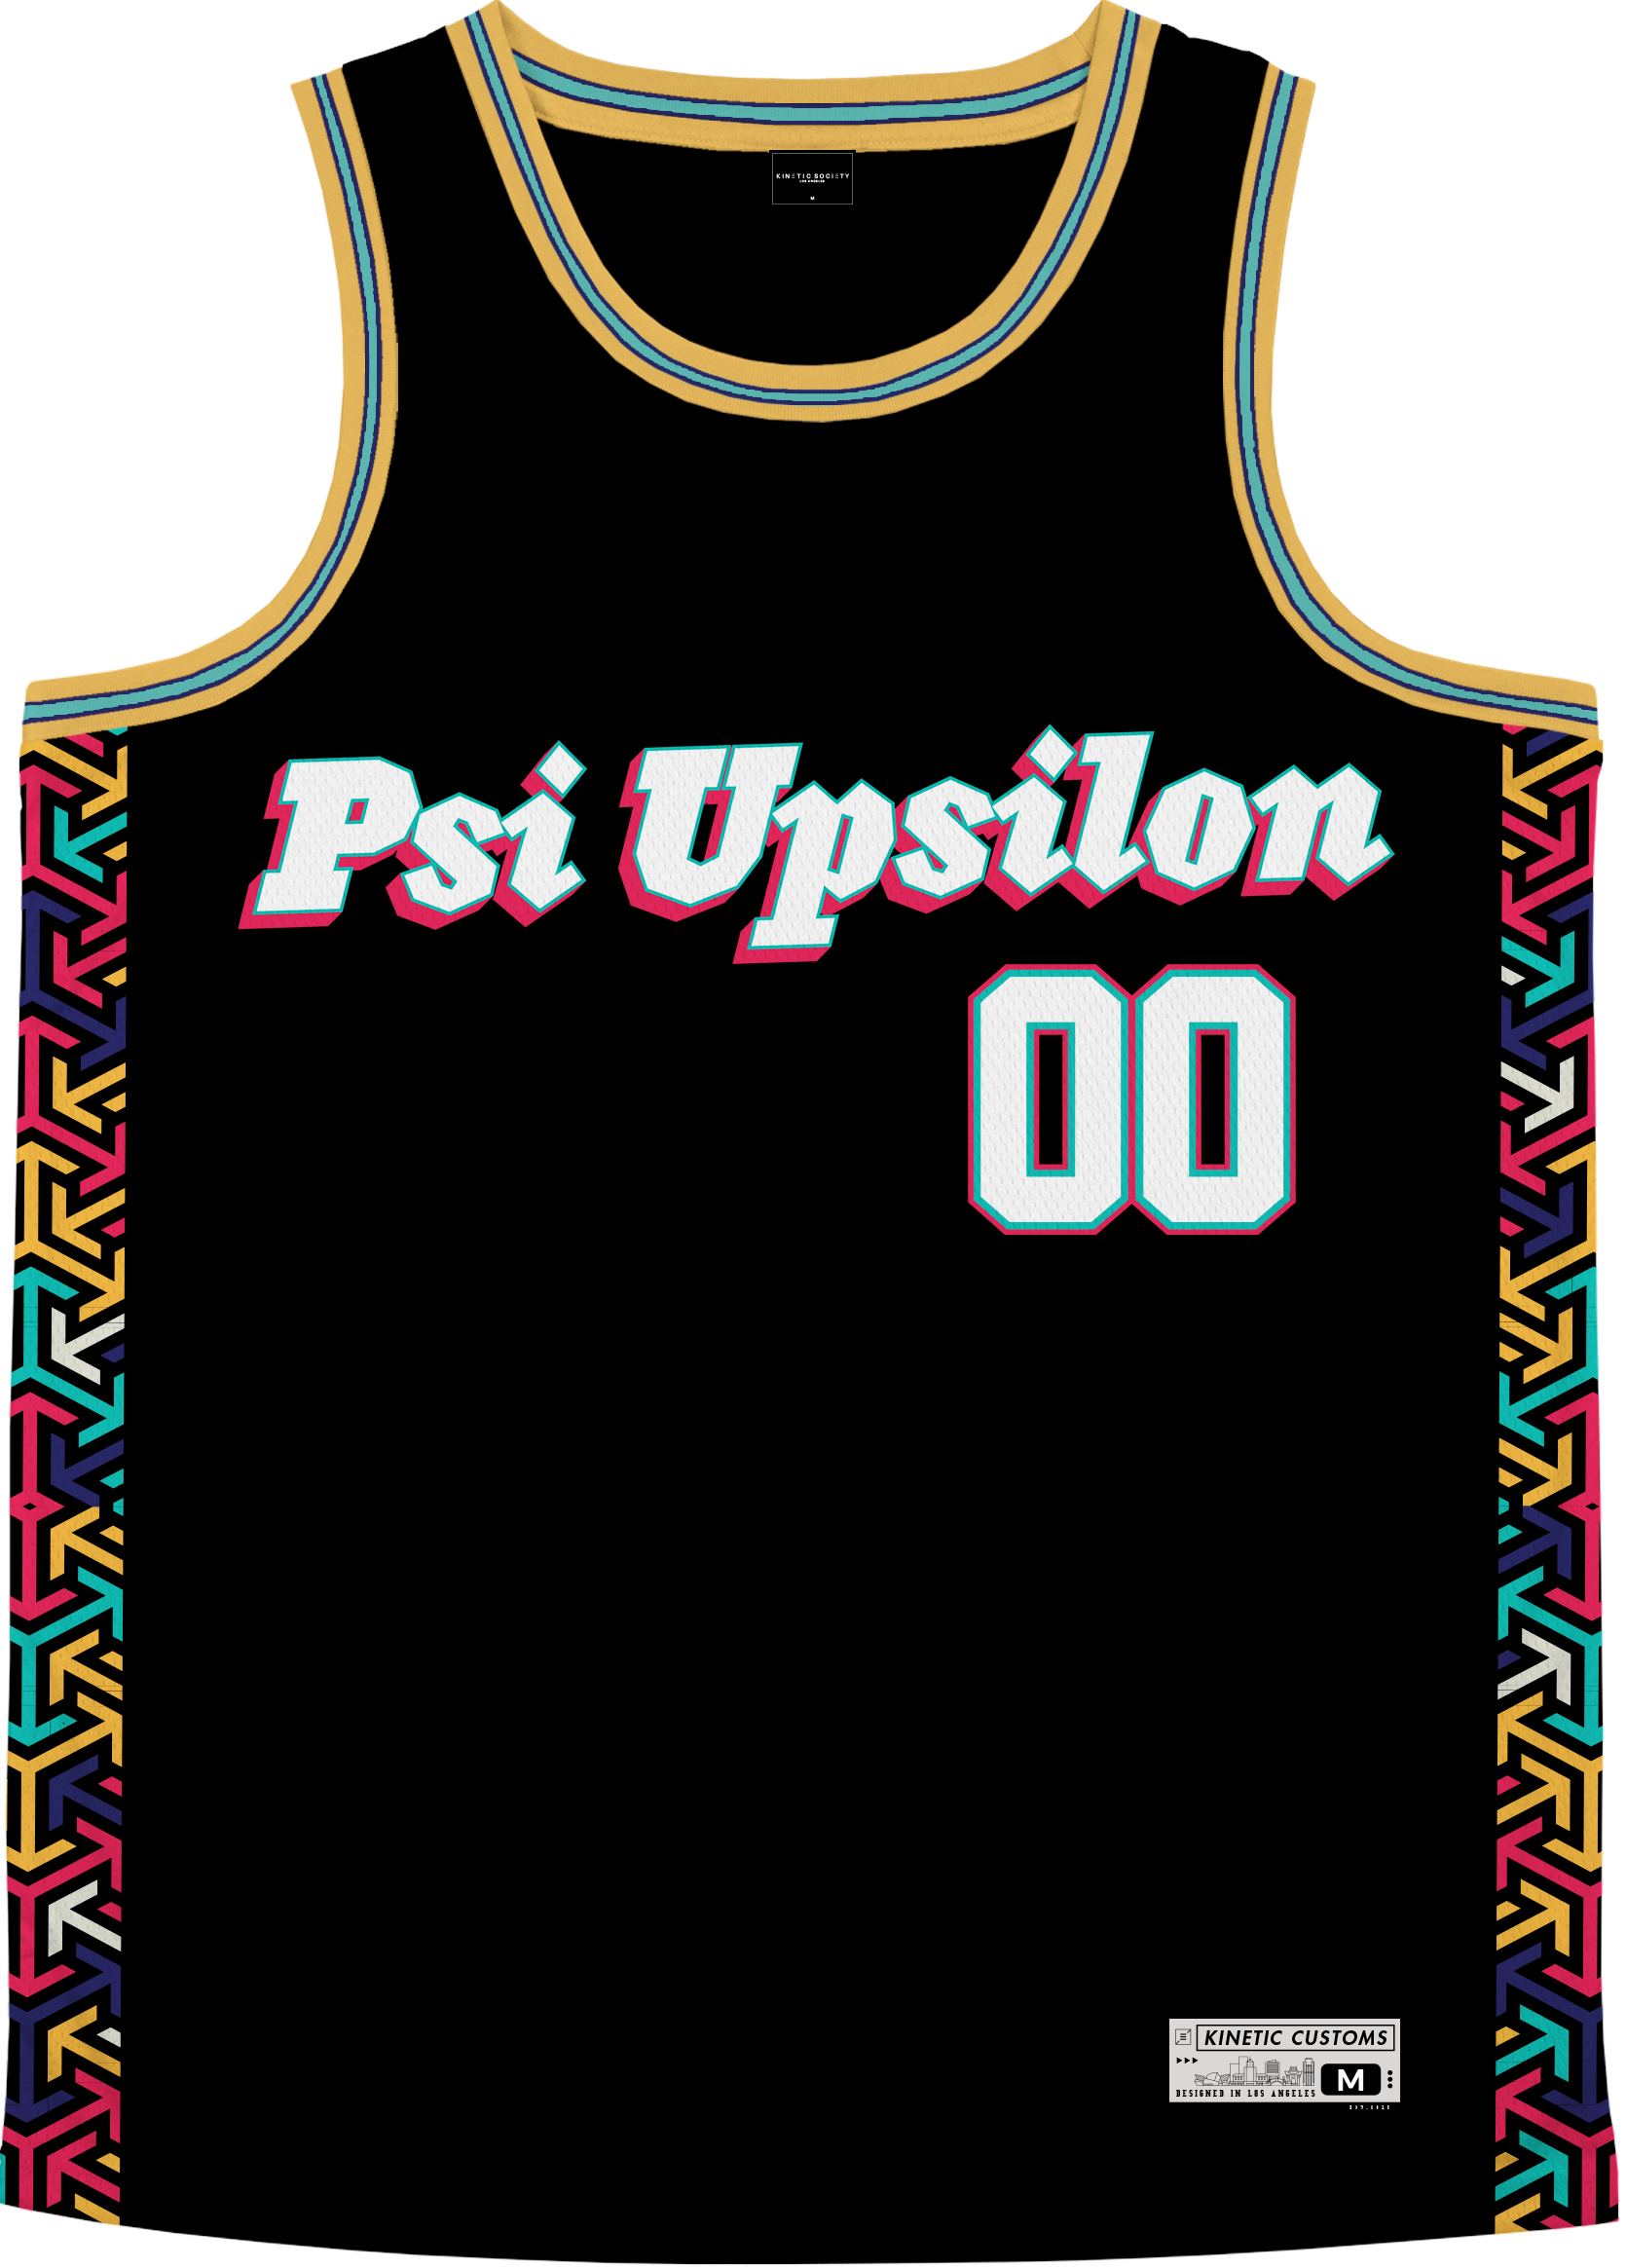 PSI UPSILON - Cubic Arrows Basketball Jersey